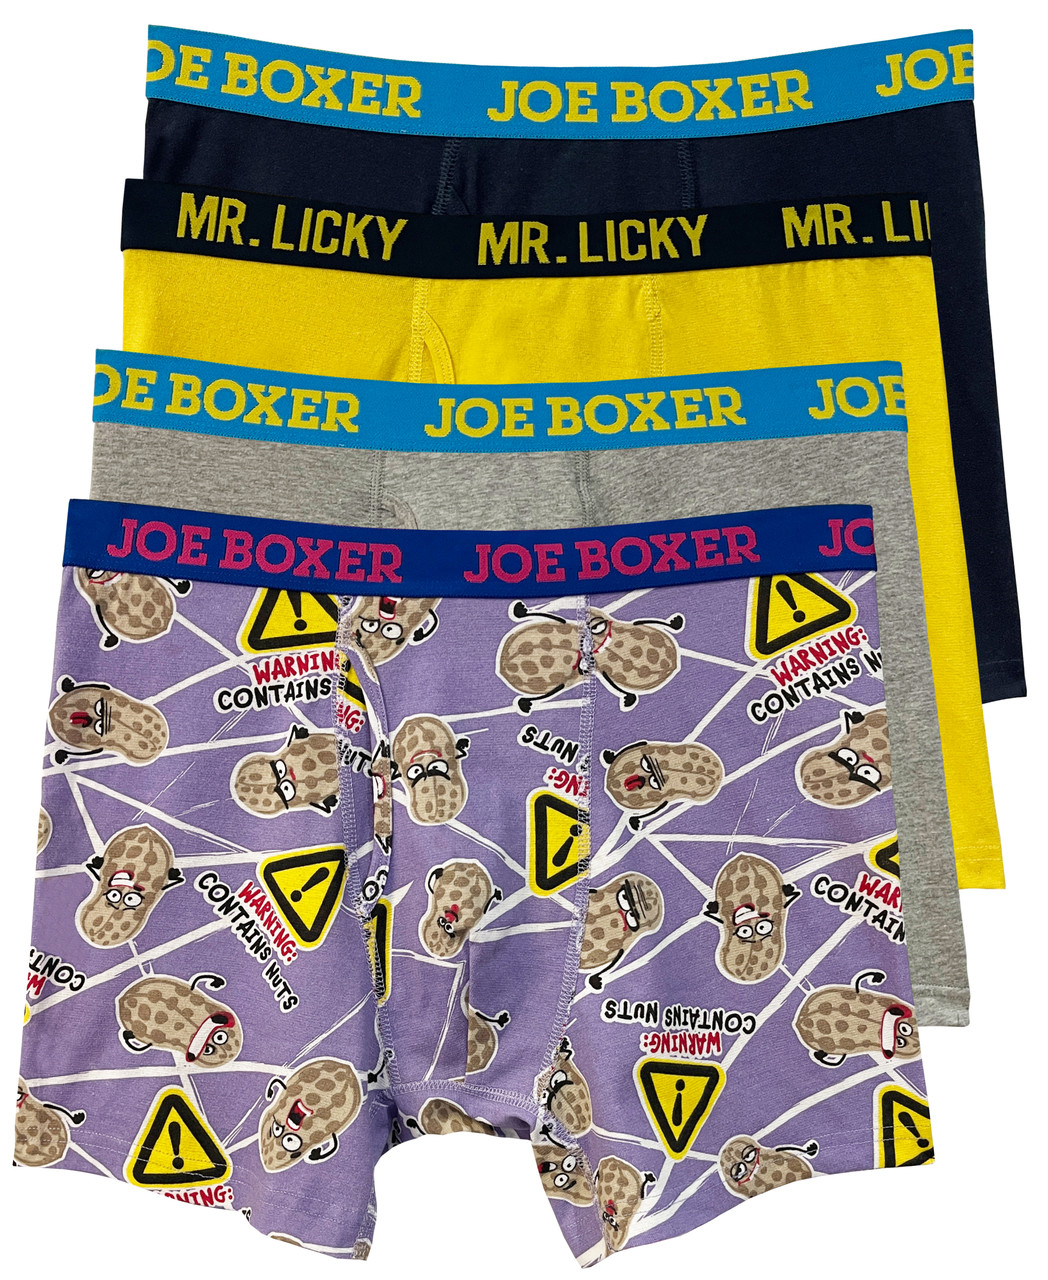 CRAZYBOXER Men's Underwear Spongebob Squarepants Perfect fit